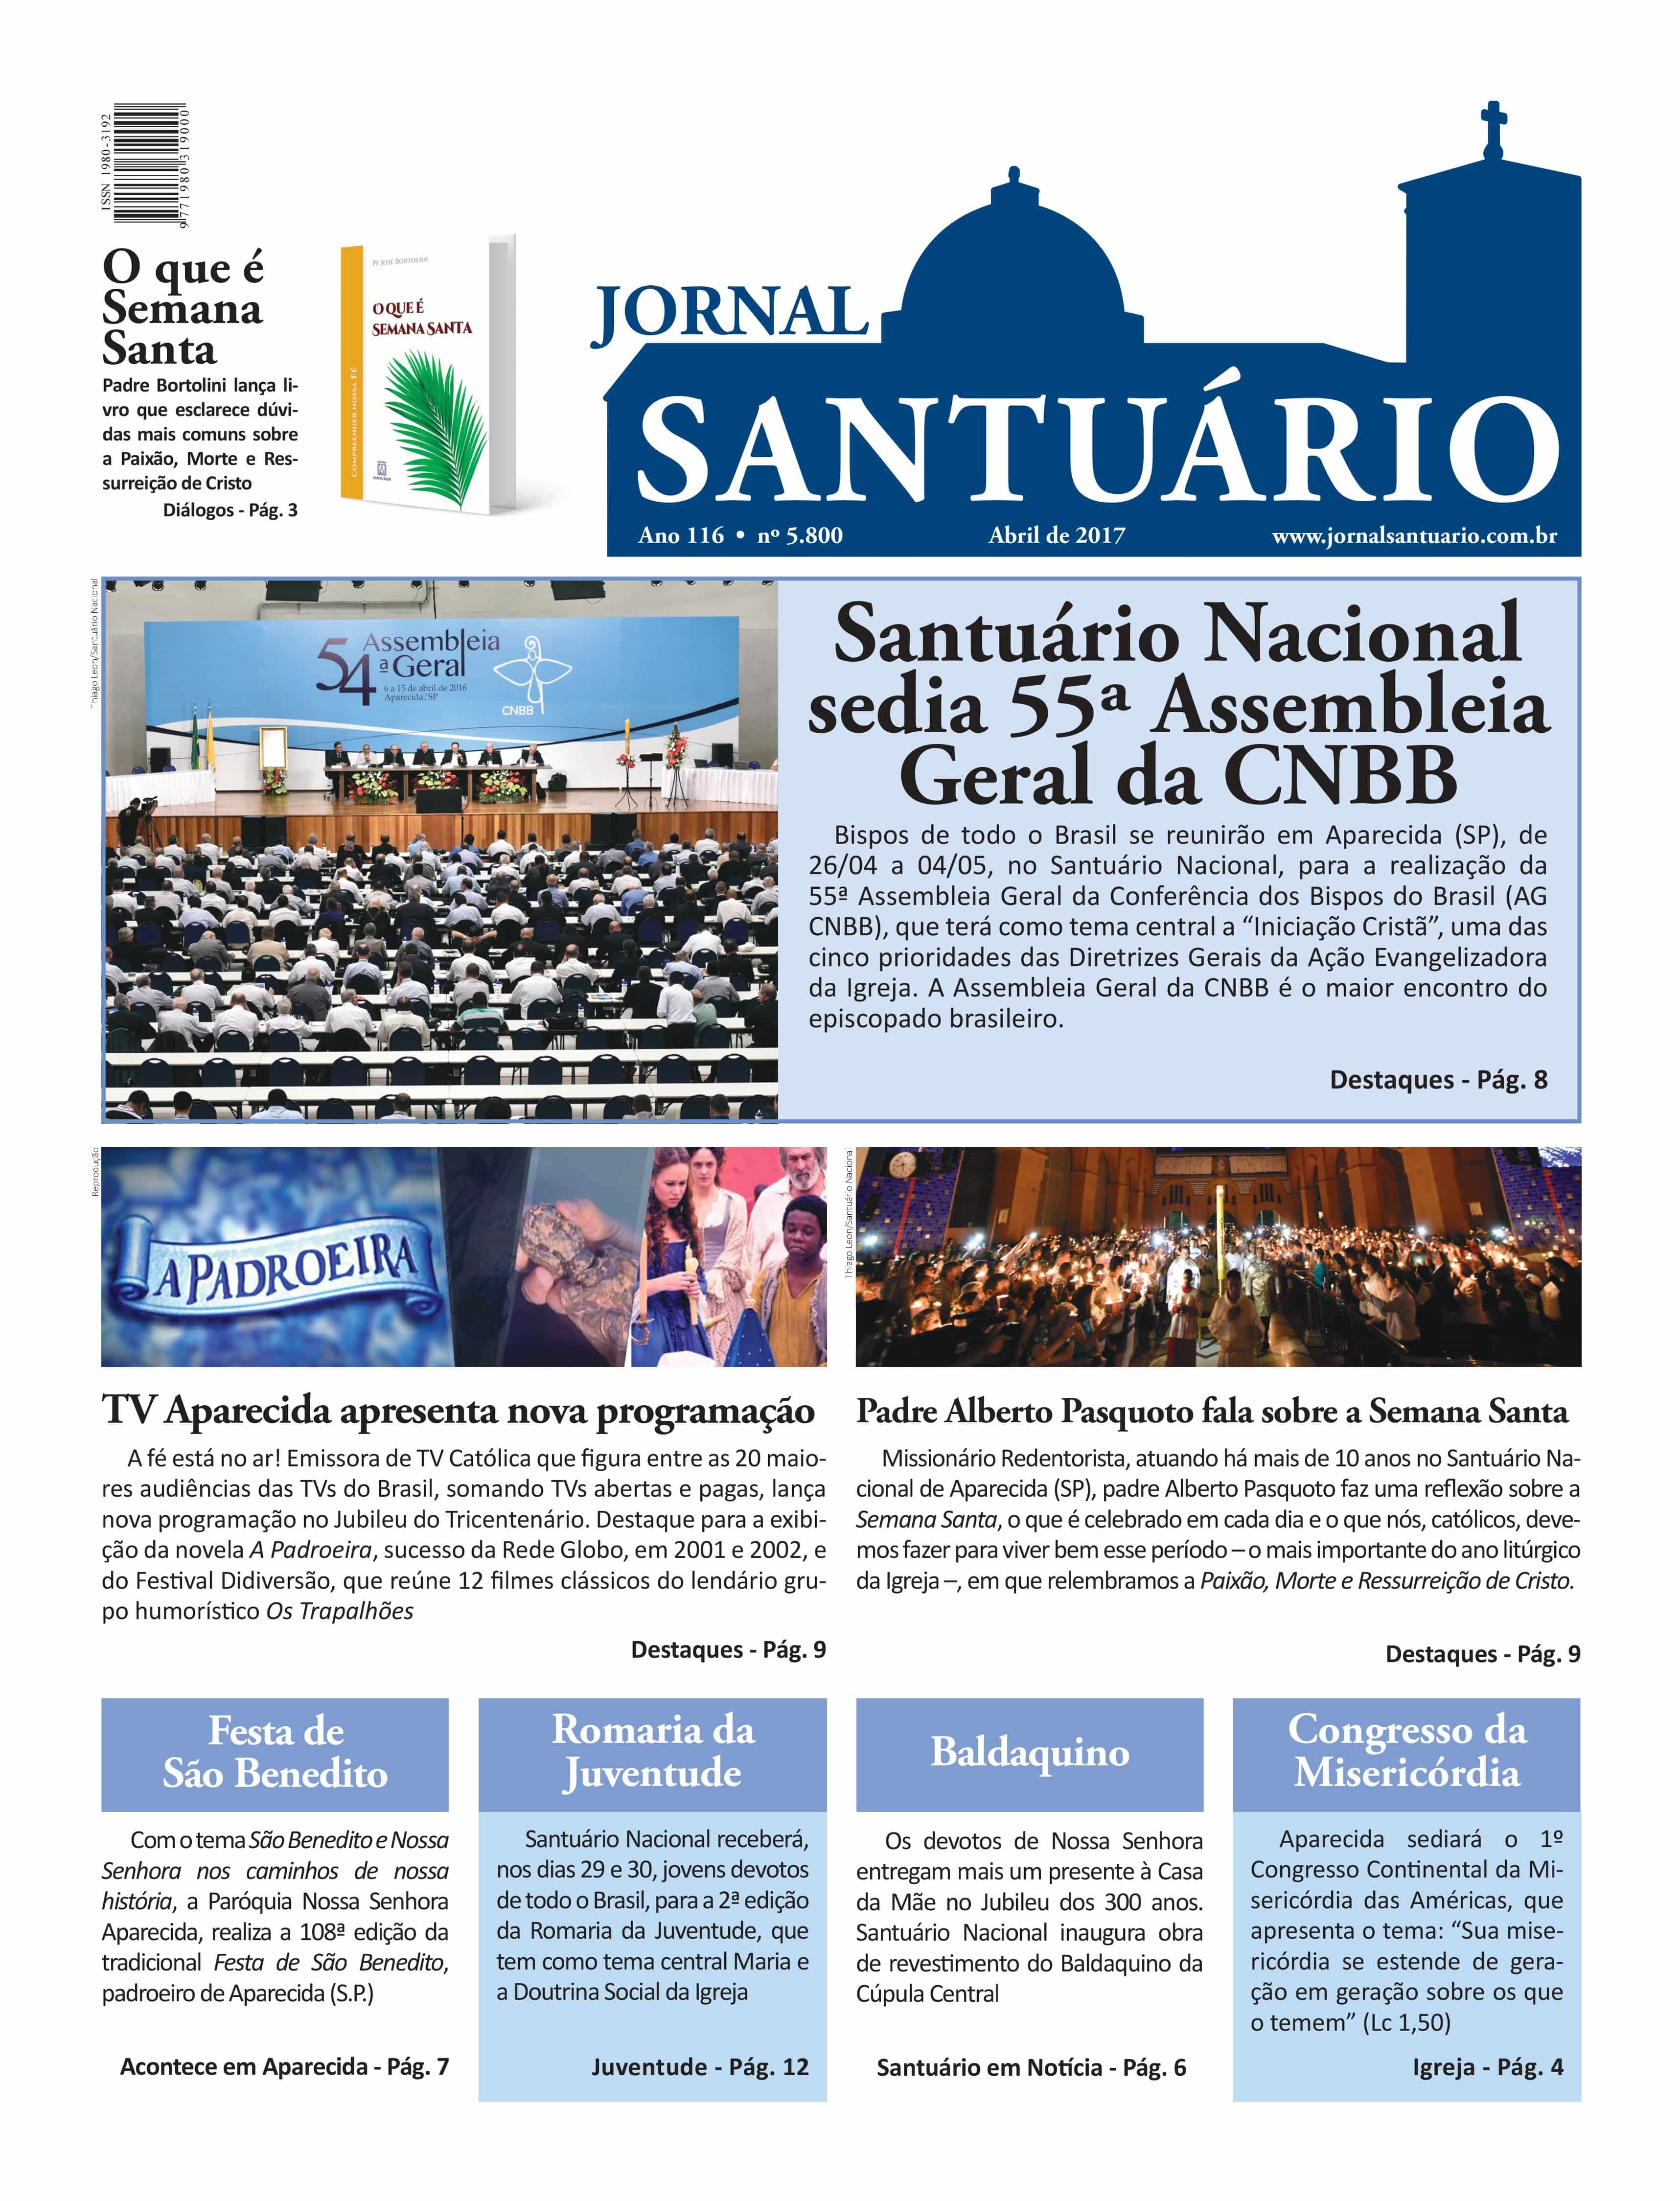 Capa JS 5800 Abril 2017 Jornal Santuário